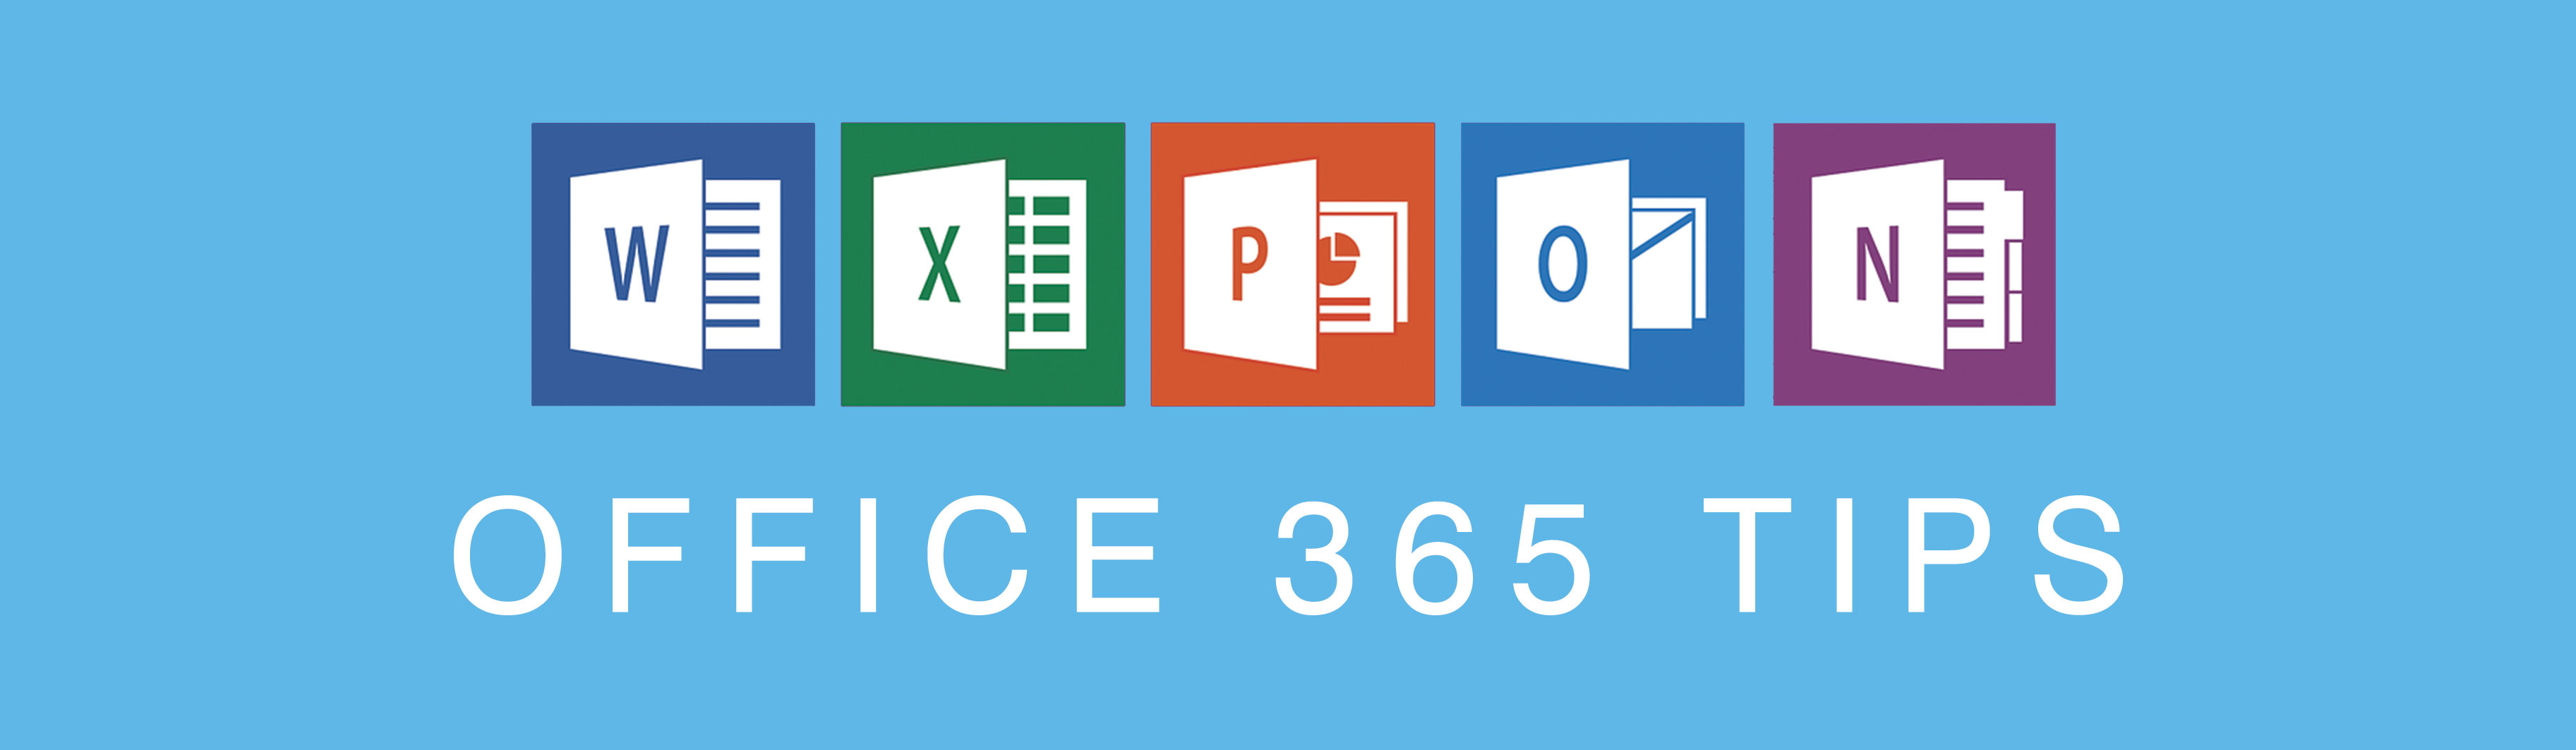 Microsoft Office 365 Tips